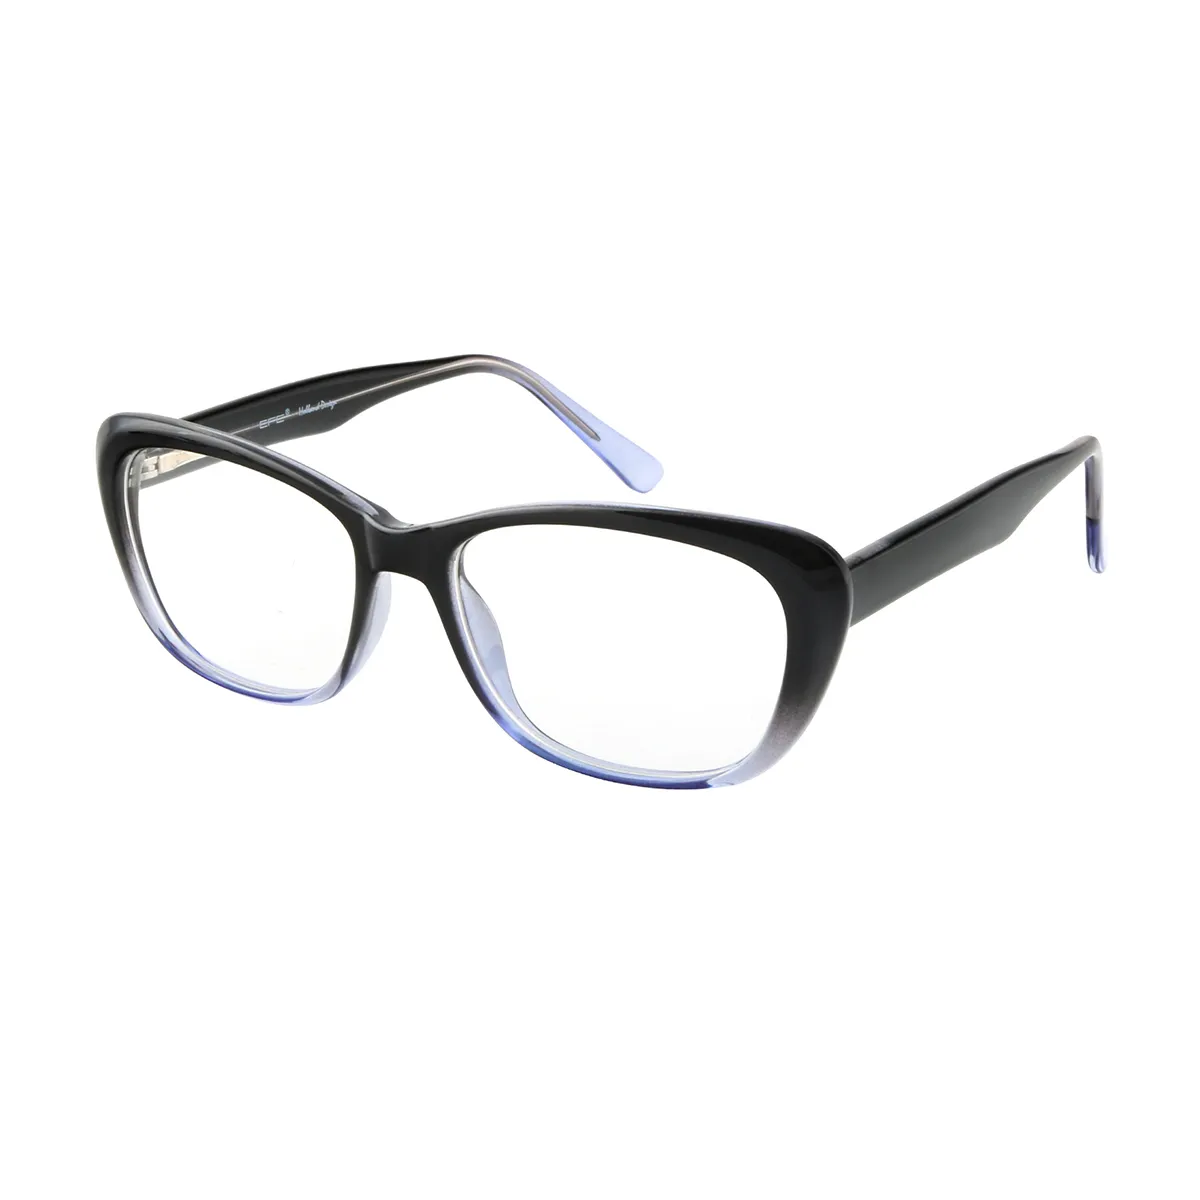 Olivia - Oval Transparent-blue Glasses for Women